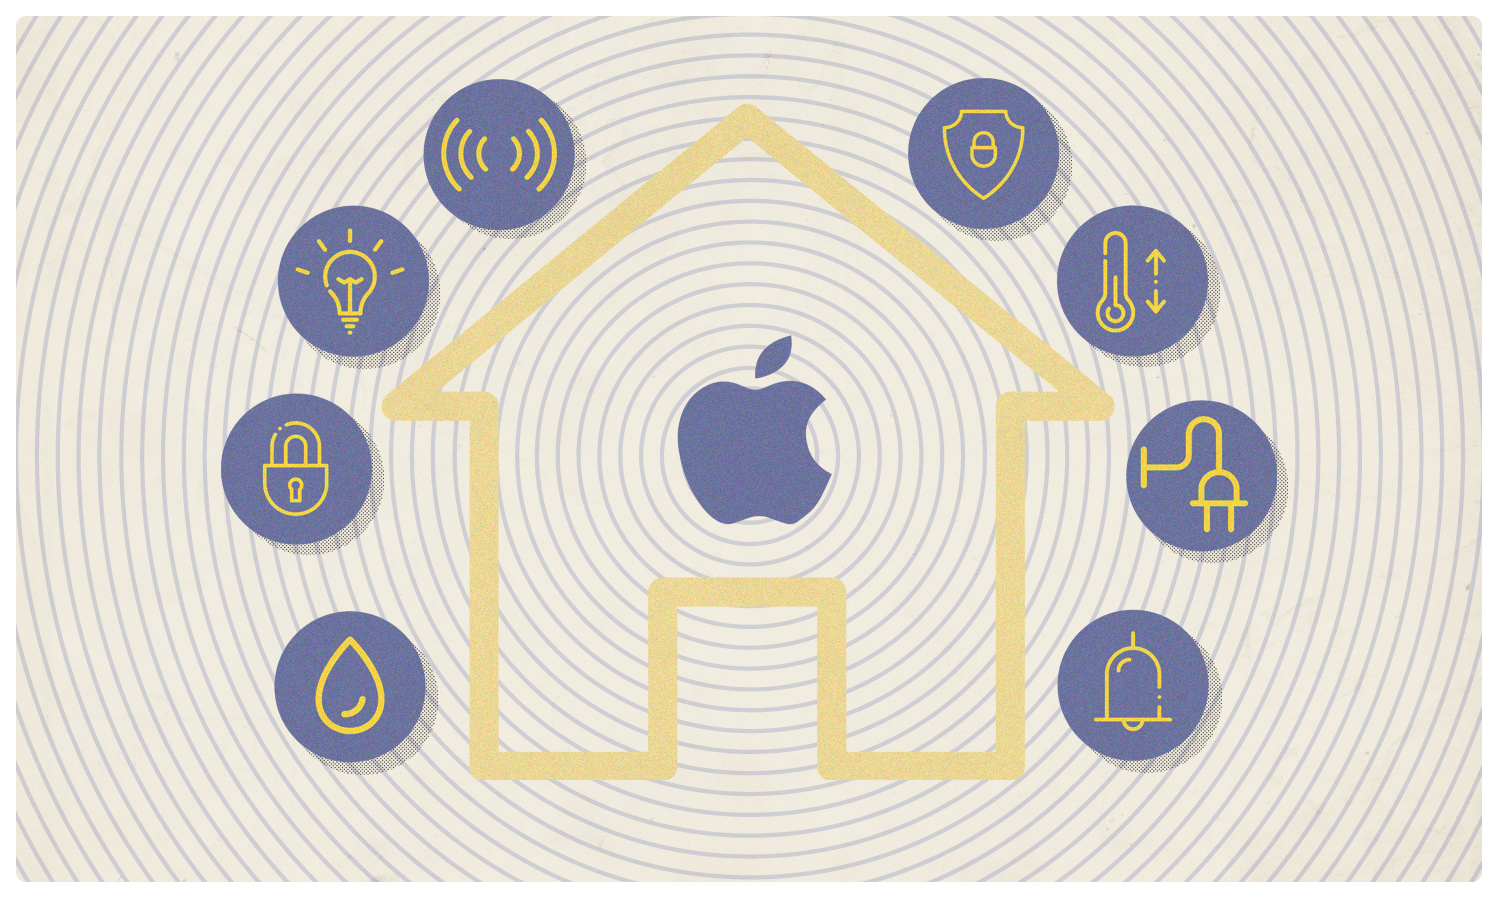 The Apple Homekit smart home system